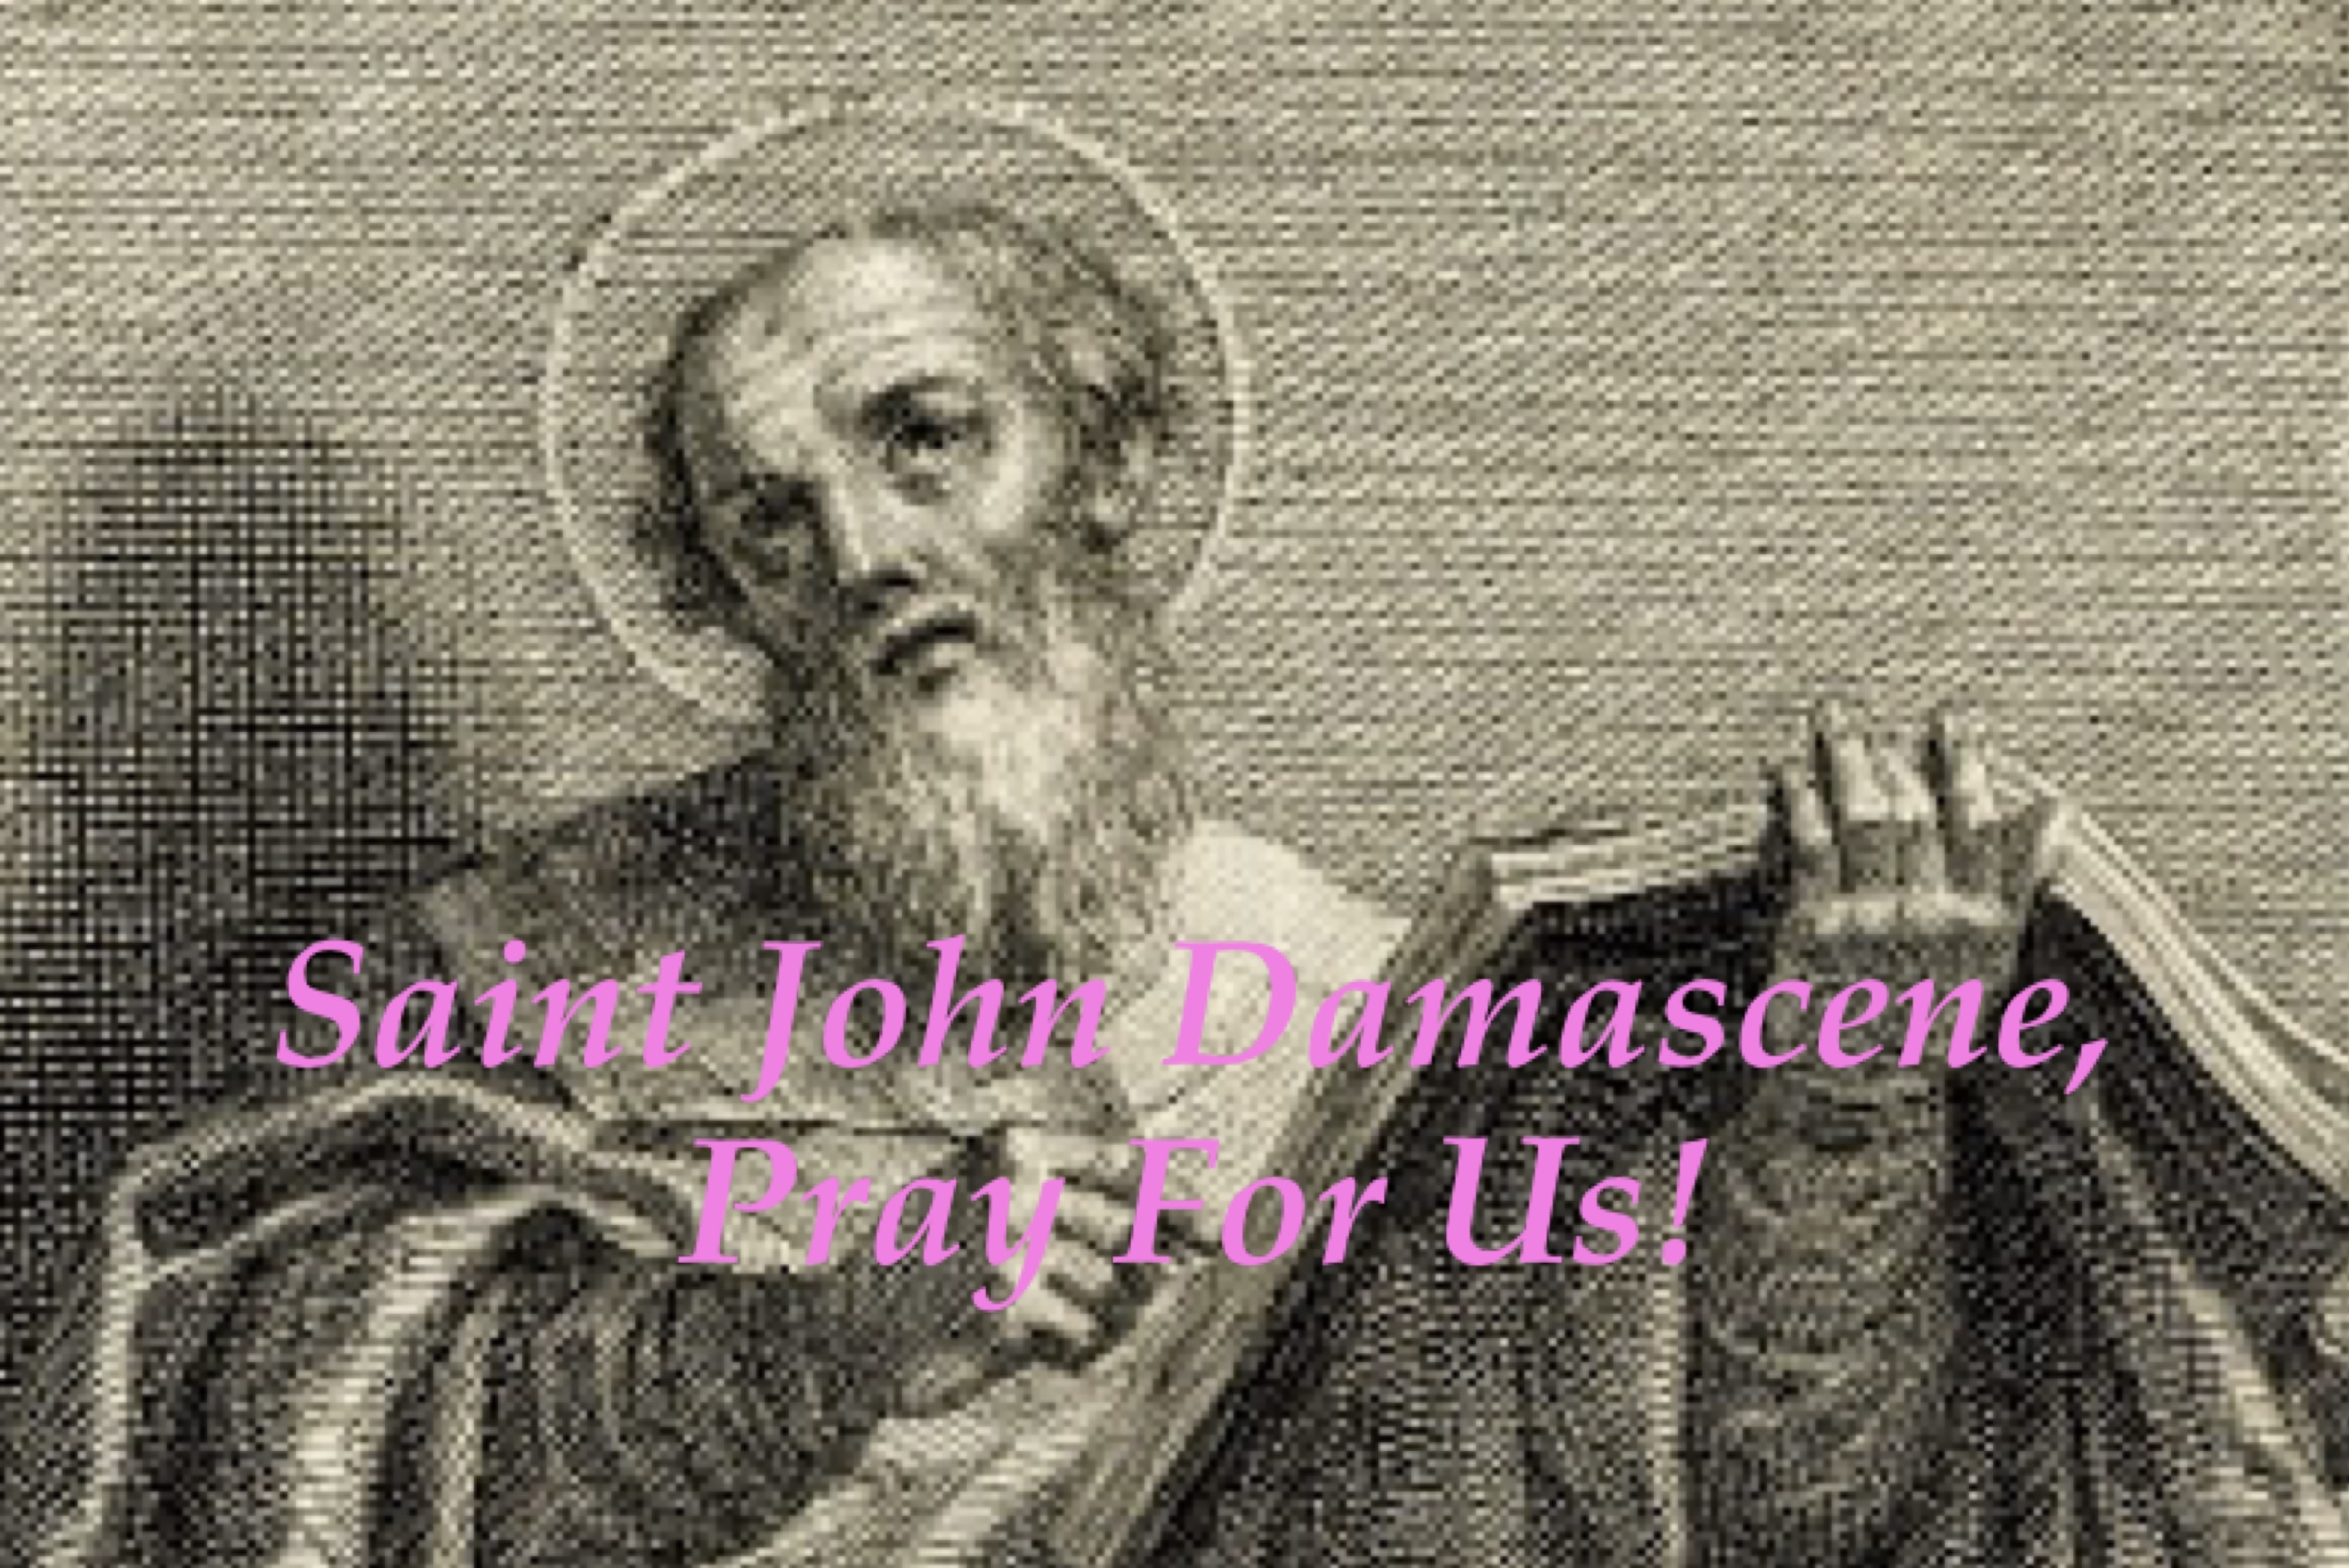 4th December - Saint John Damascene